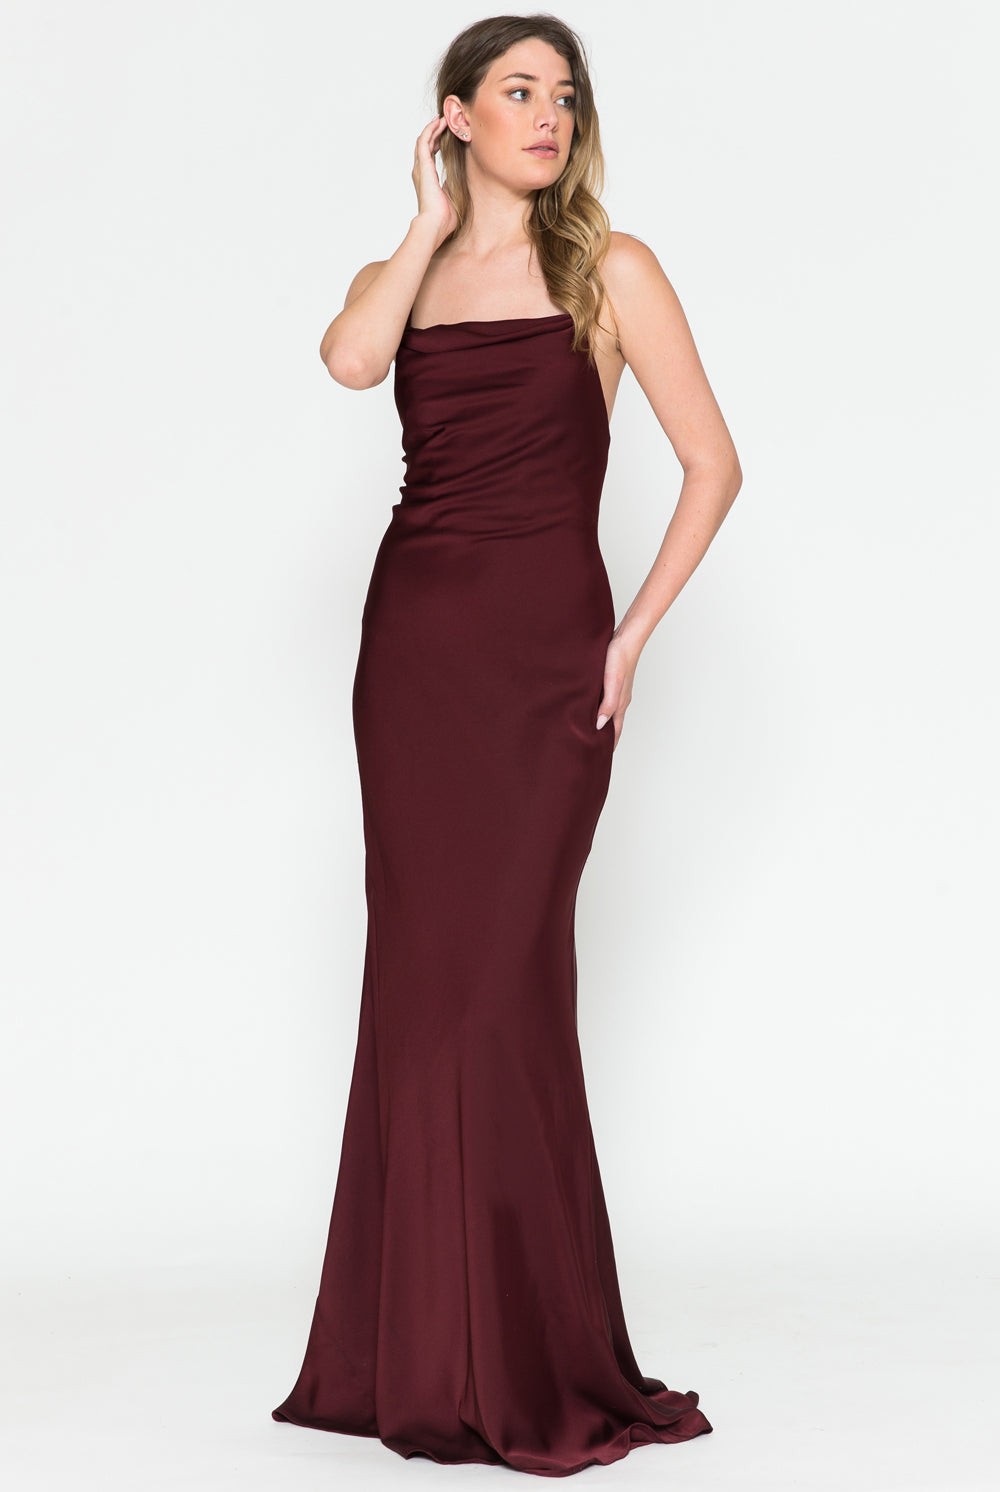 Cowl Neck Spaghetti Straps Satin Long Wedding & Evening Dress AC6111-Wedding Dress-smcfashion.com